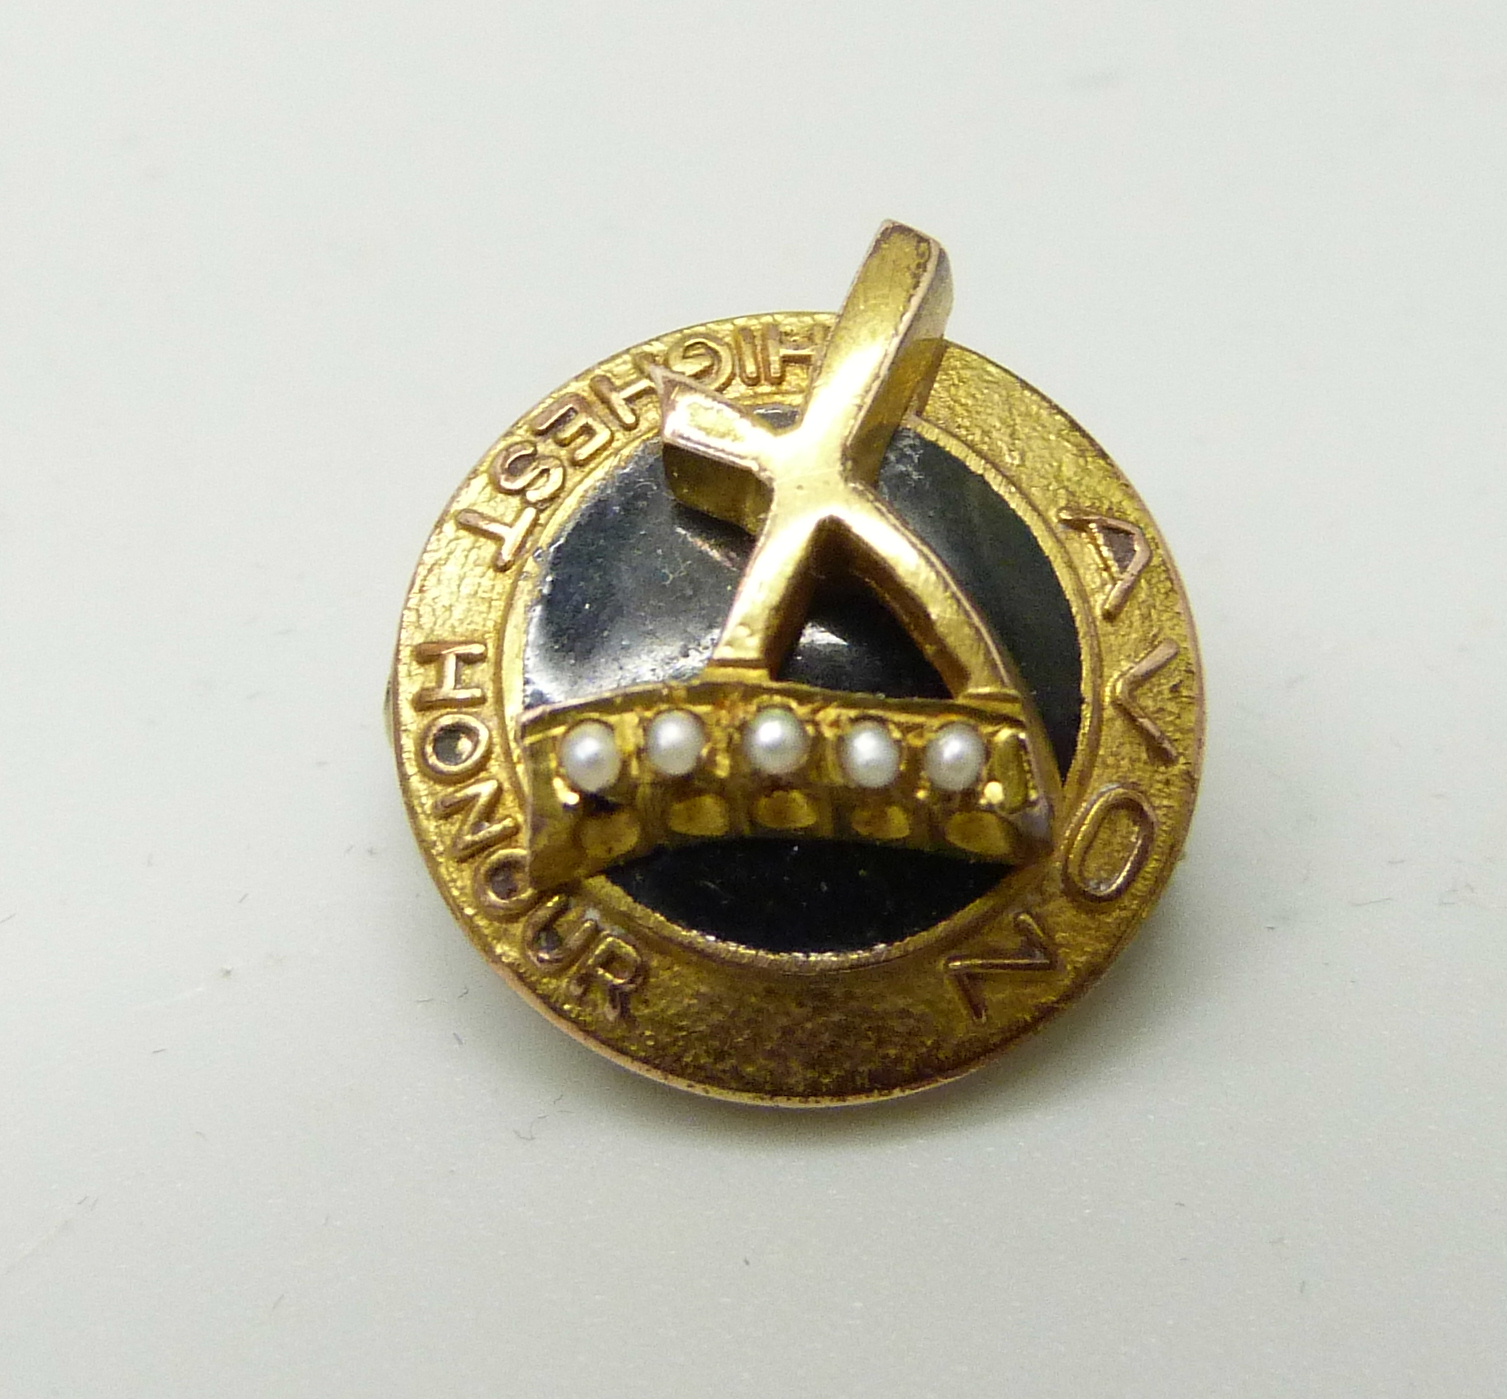 An Avon 9ct gold Highest Honour pin badge, 3.7g